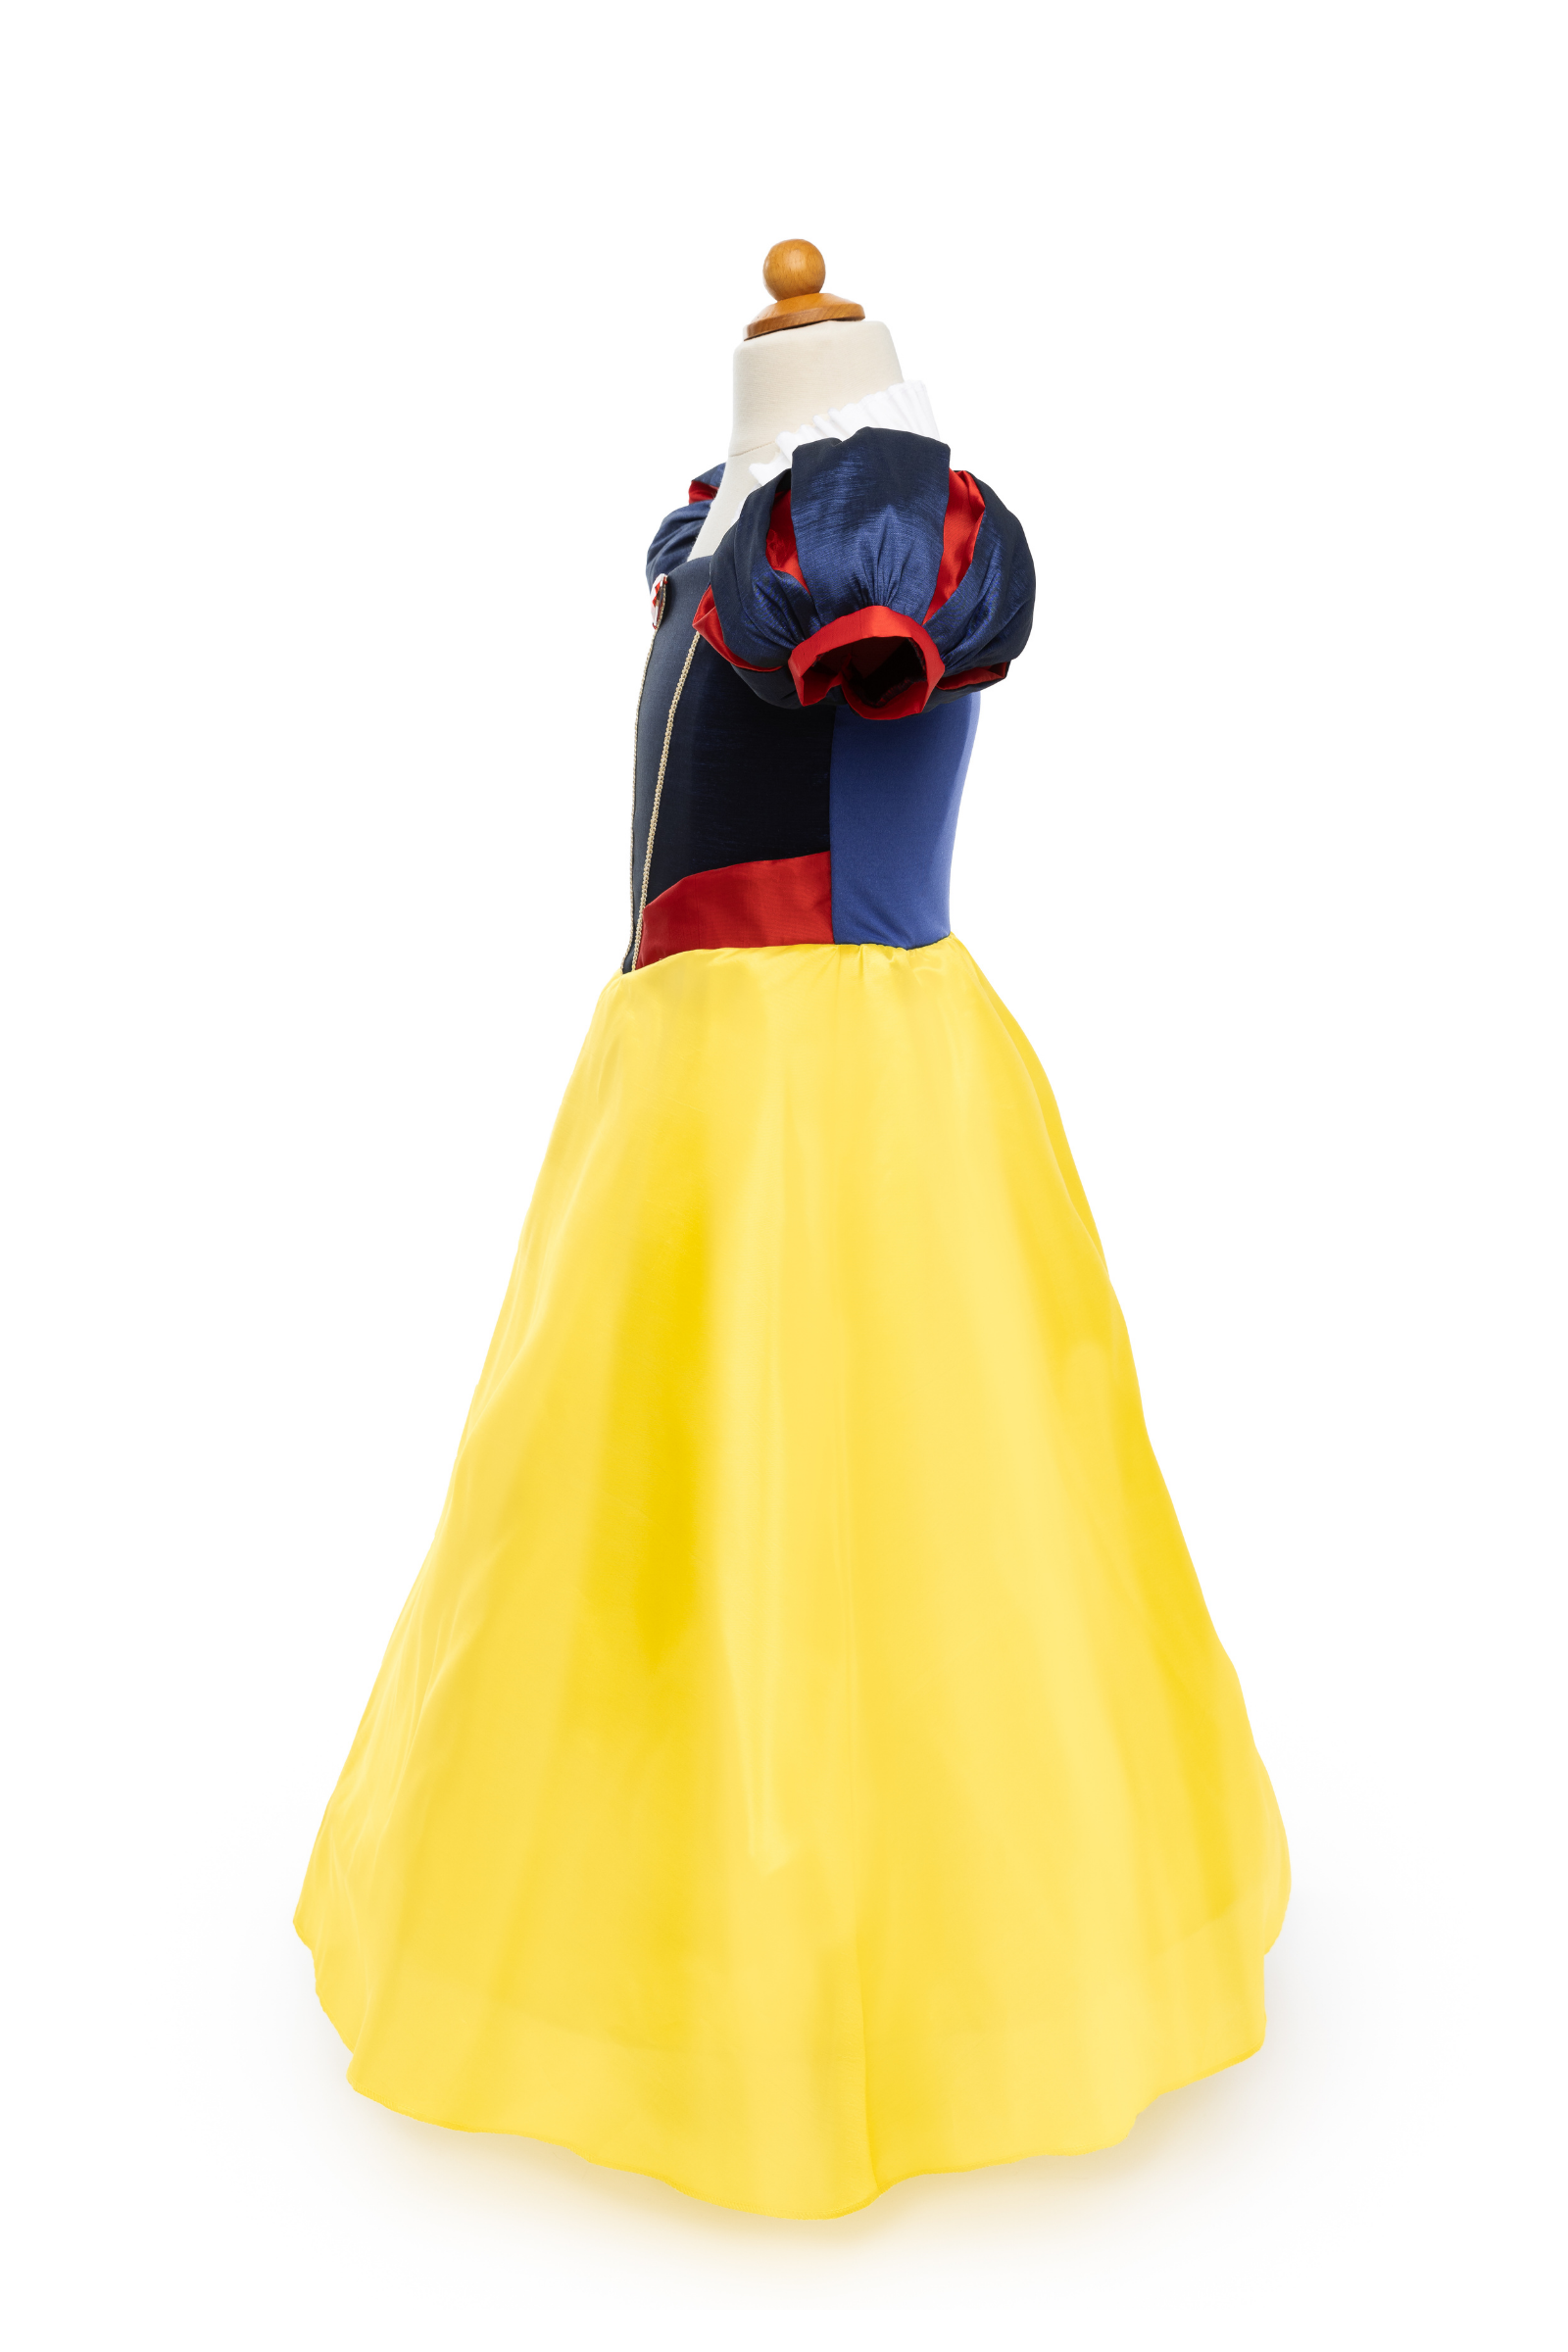 Snow White Dress / Disney Princess Dress Inspired Costume Ball